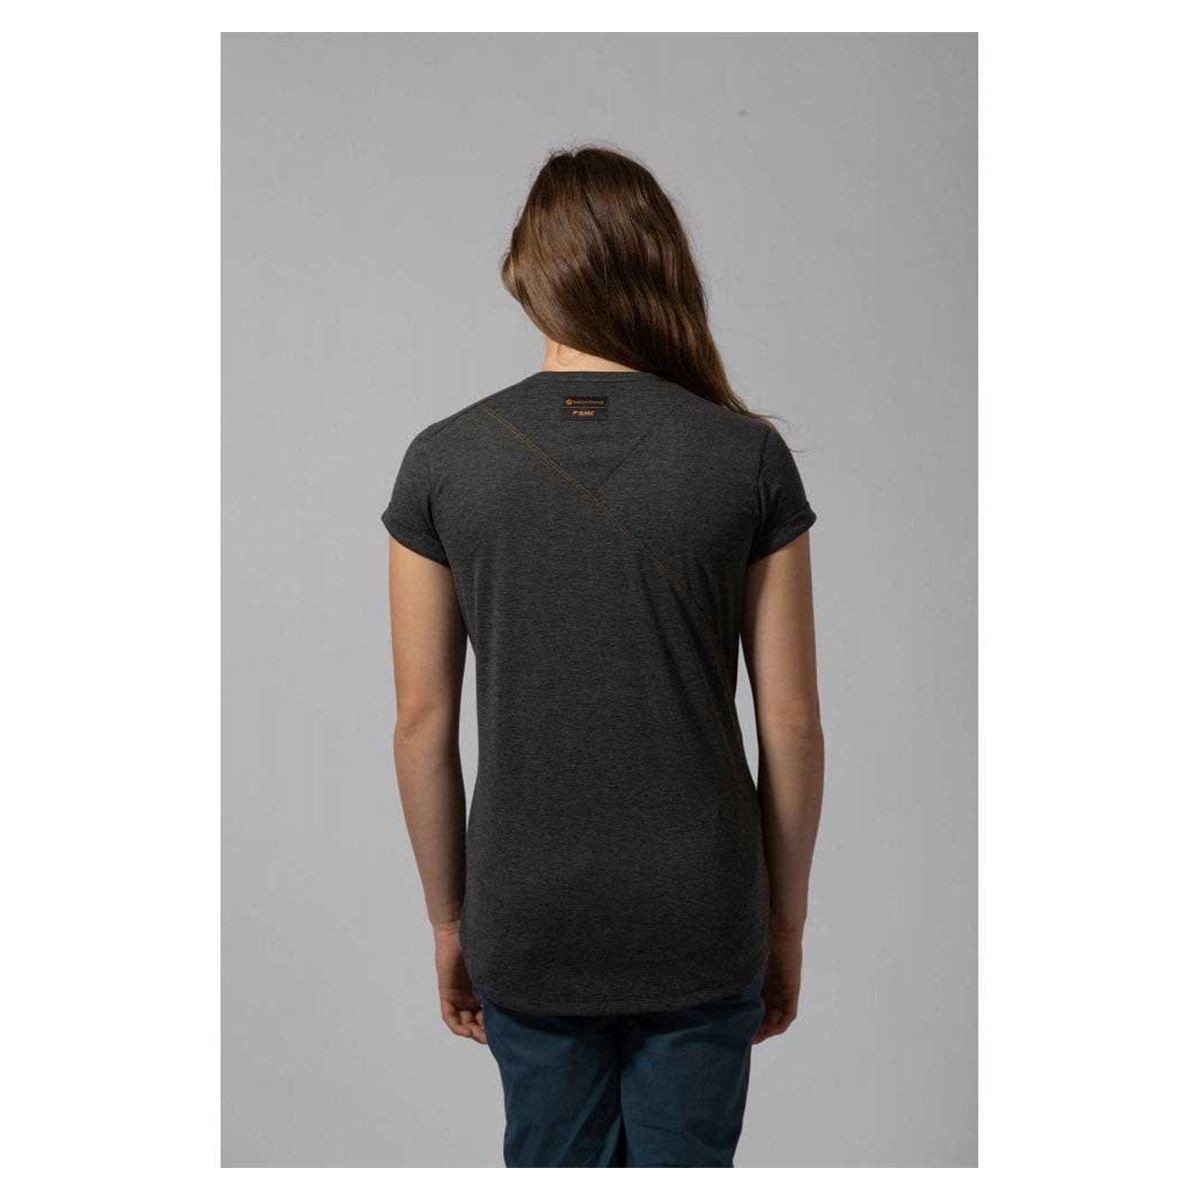 Primino 140 Crew Short Sleeve T-shirt - Women